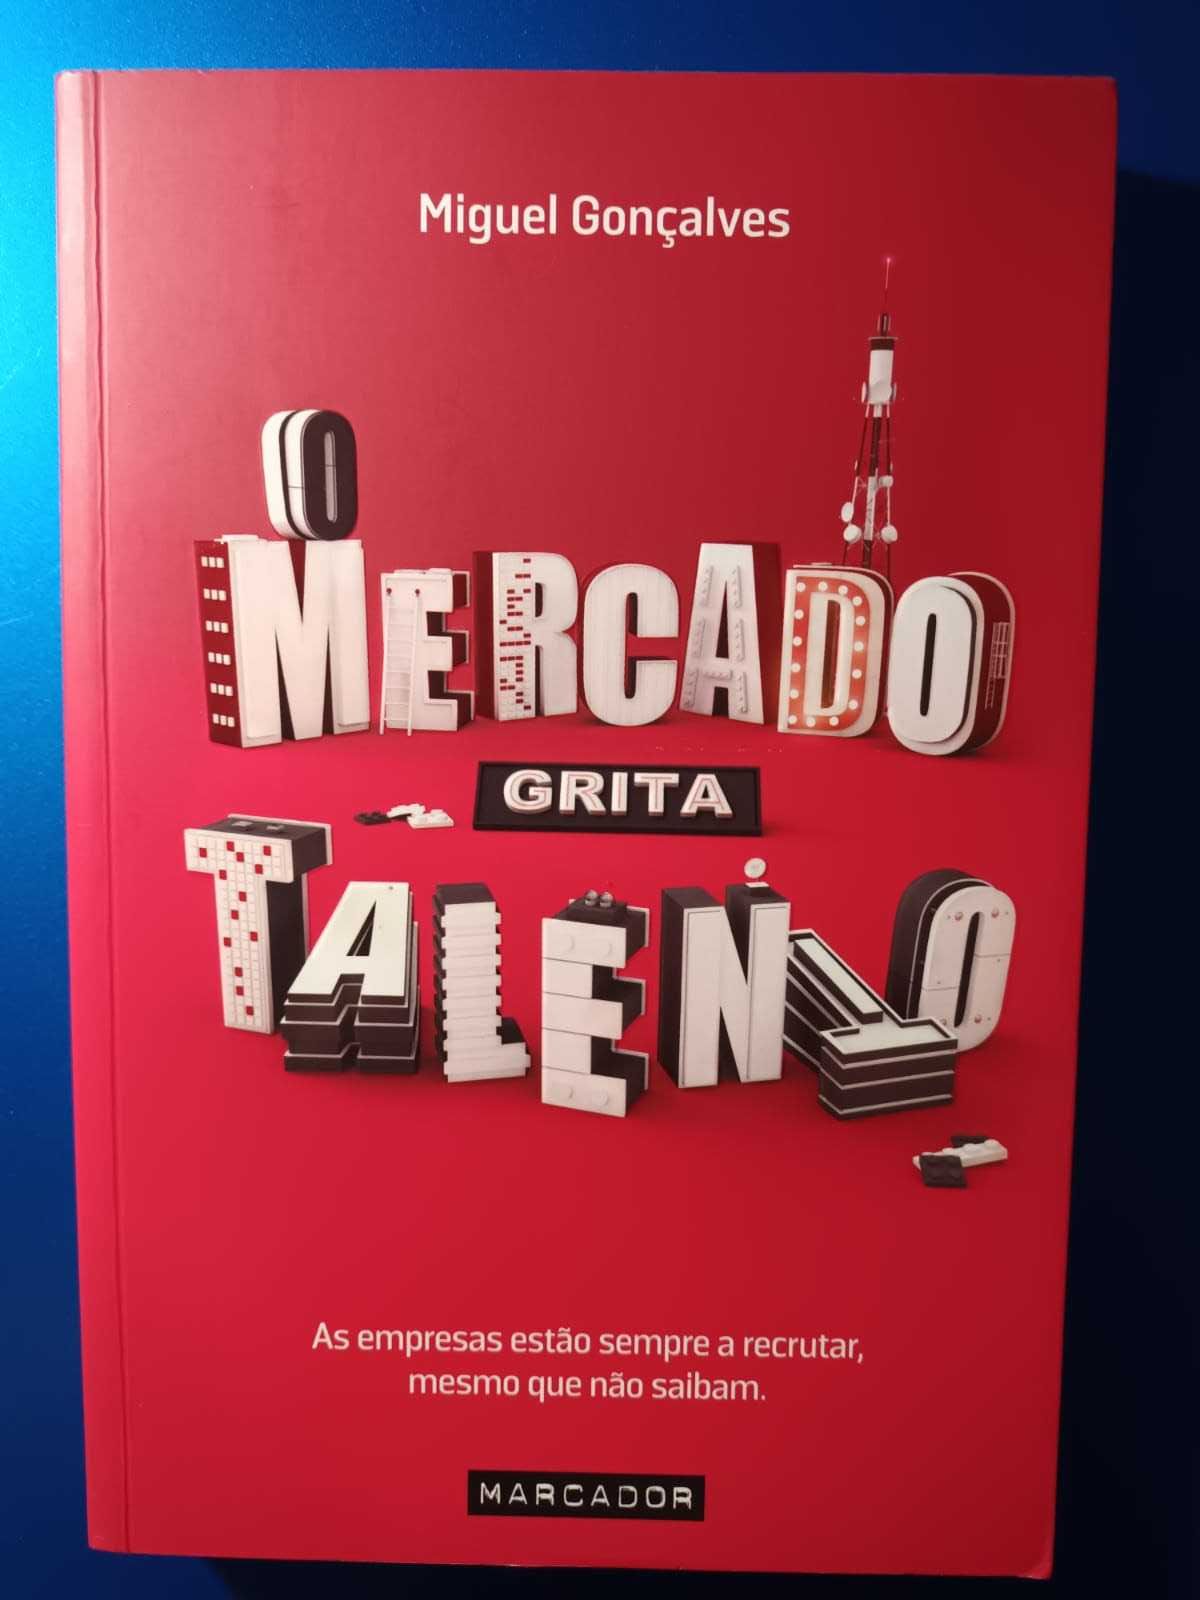 Livro "O Mercado Grita Talento" de Miguel Gonçalves